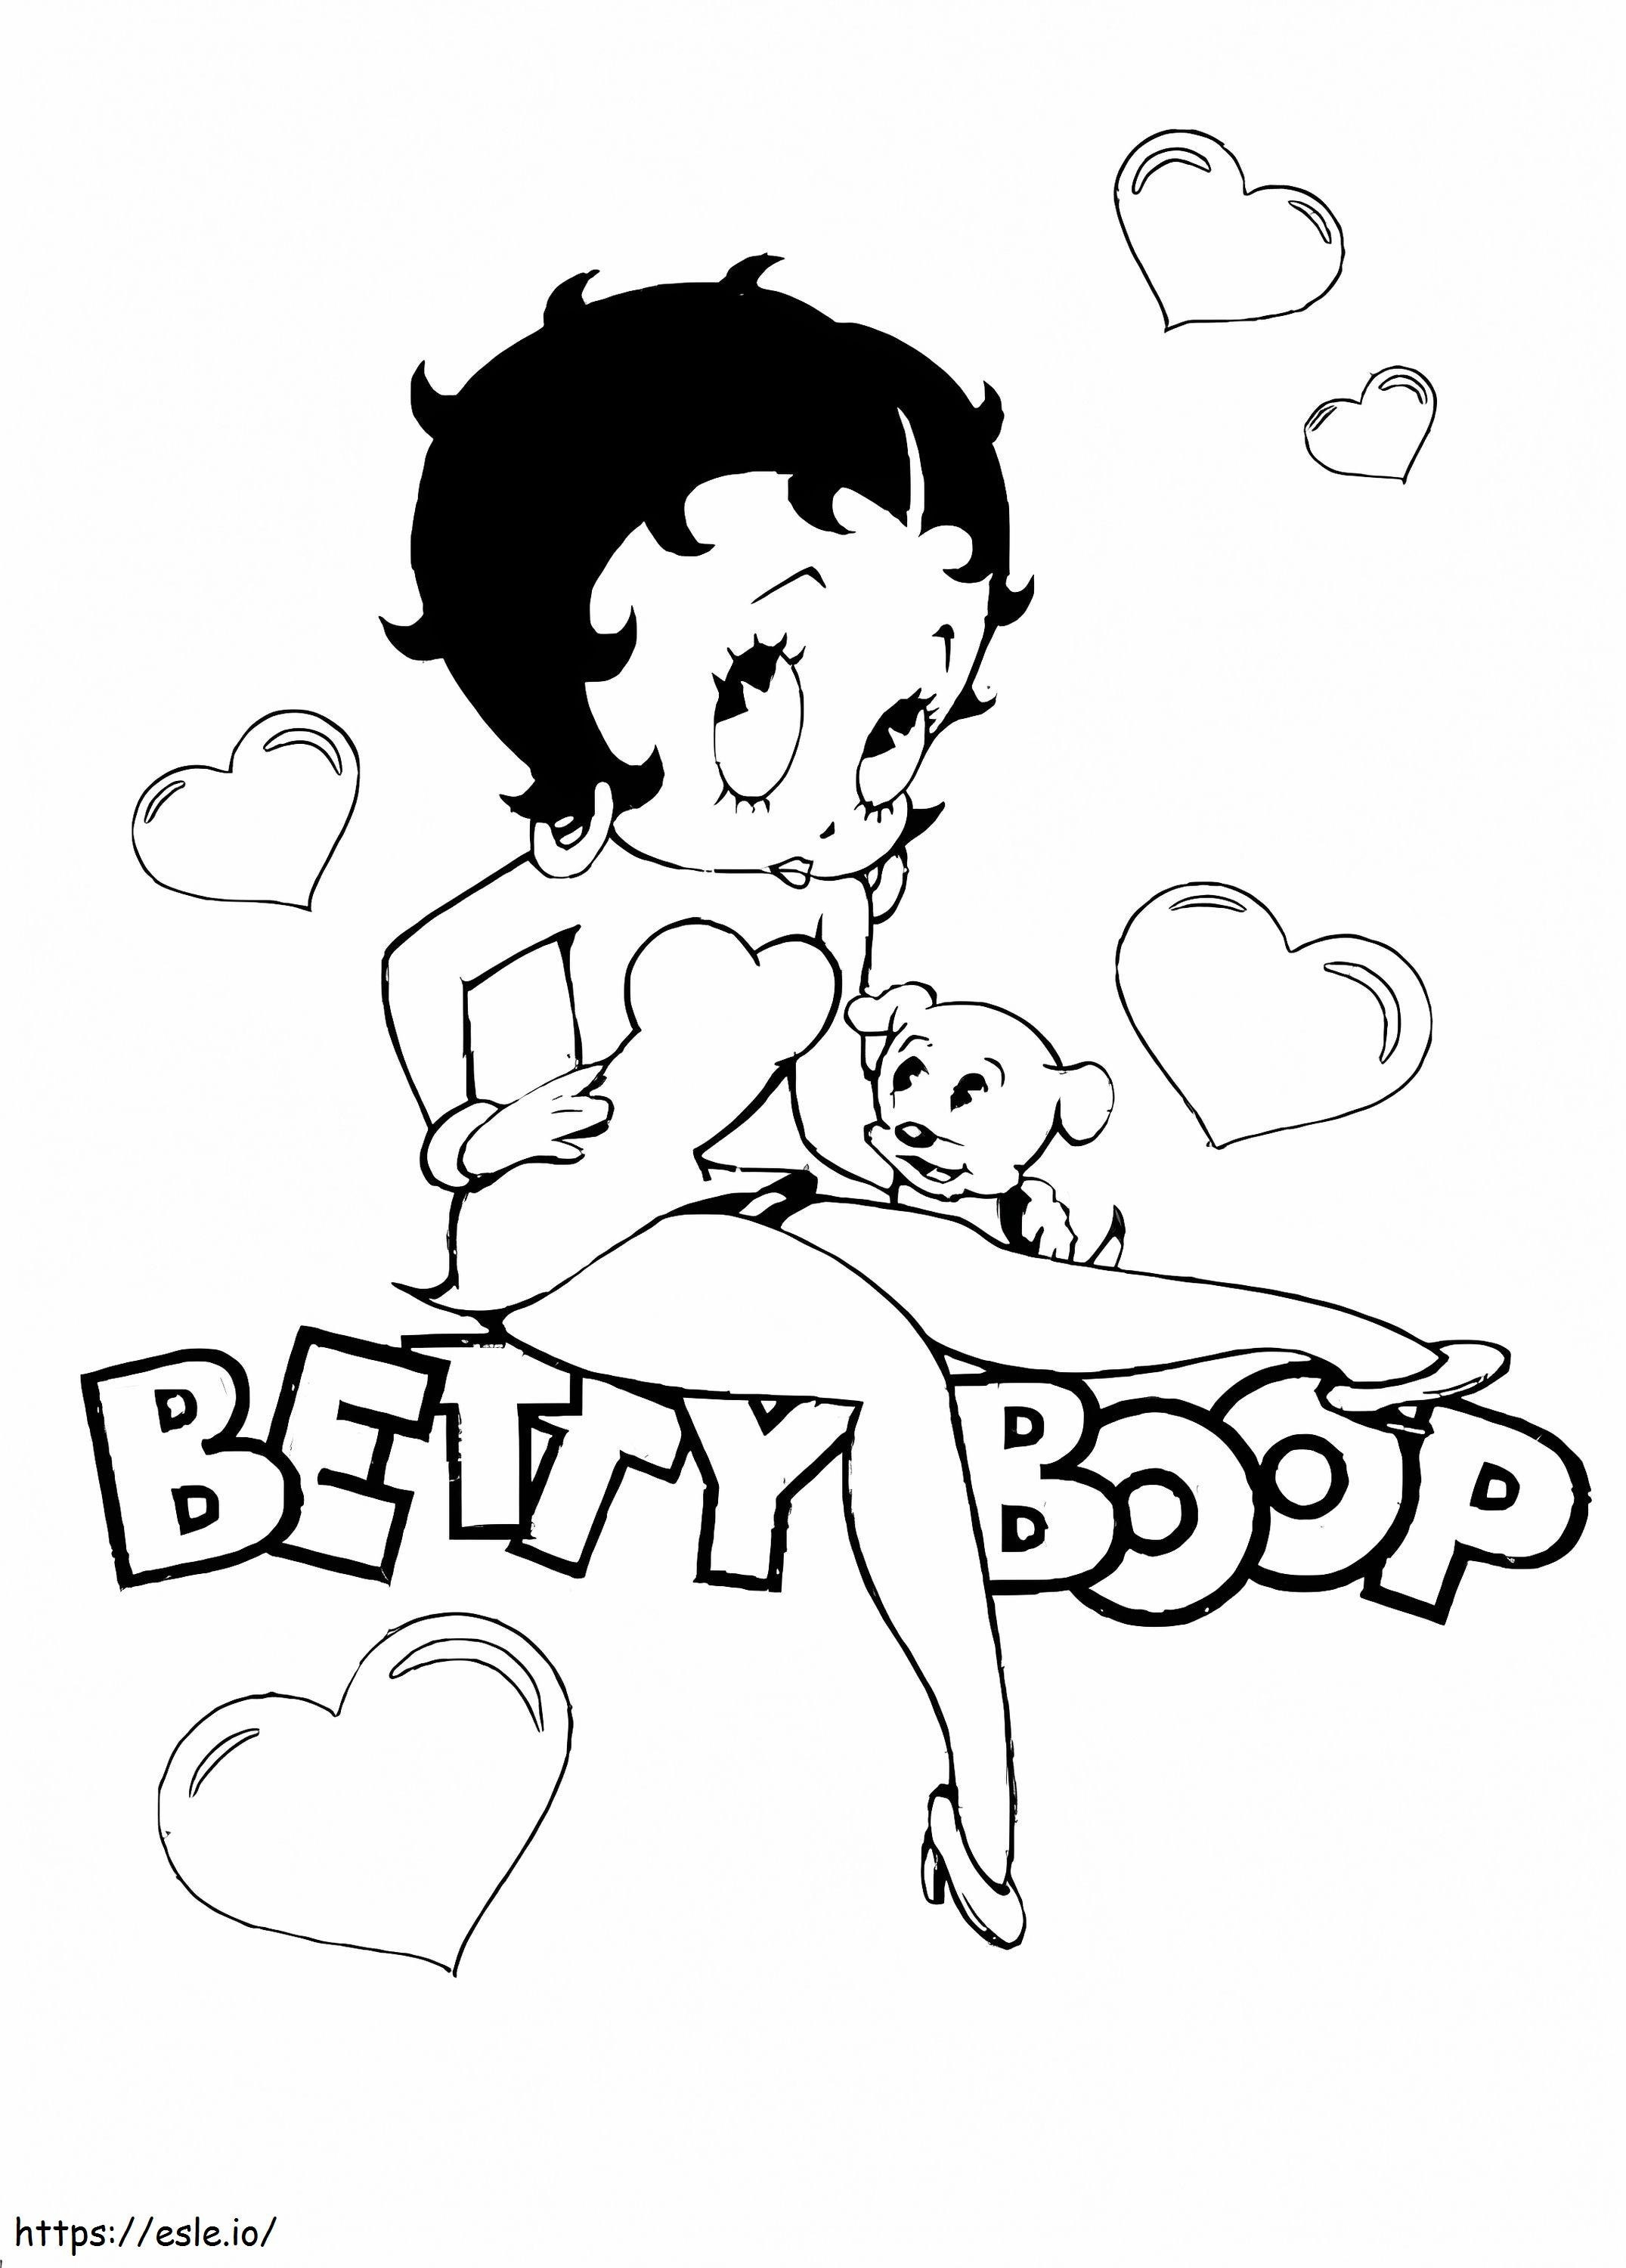 Betty Boop kleurplaat kleurplaat